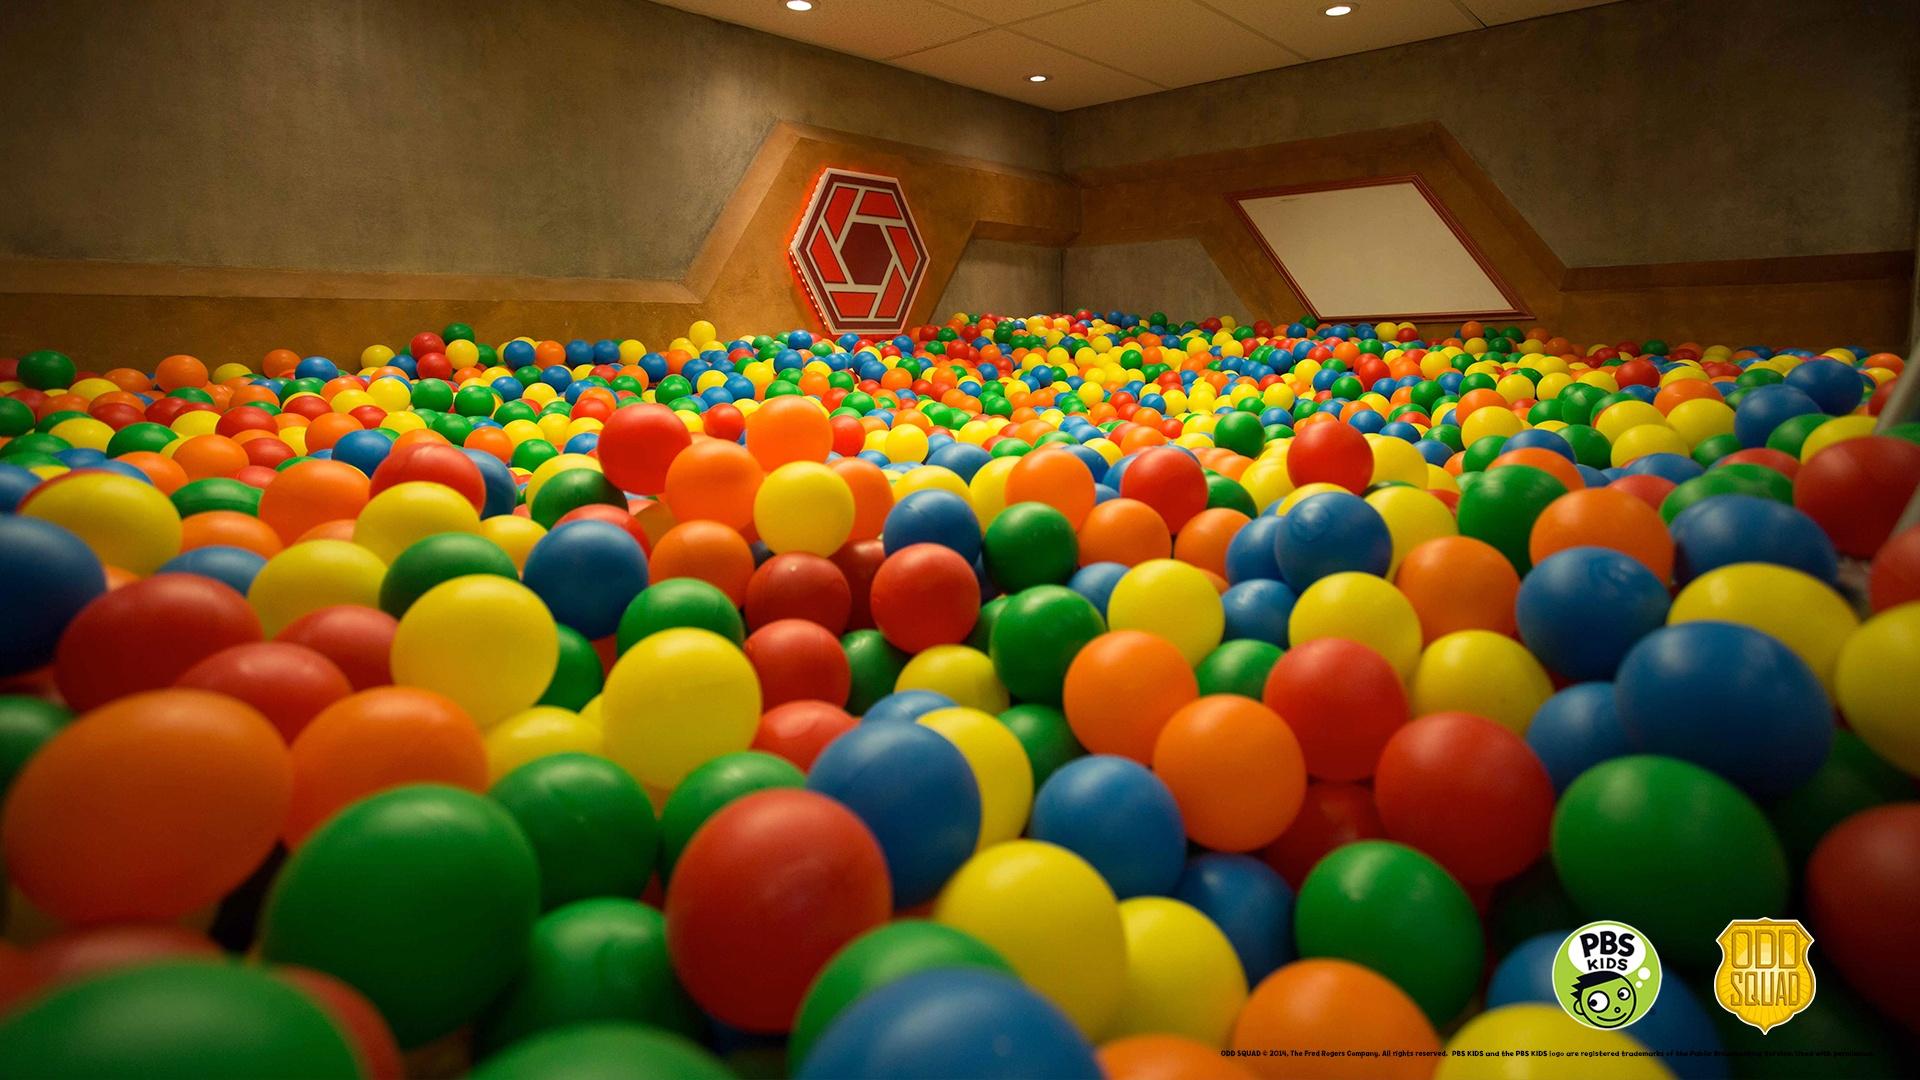 Image from Odd Squad - room full of balls.  